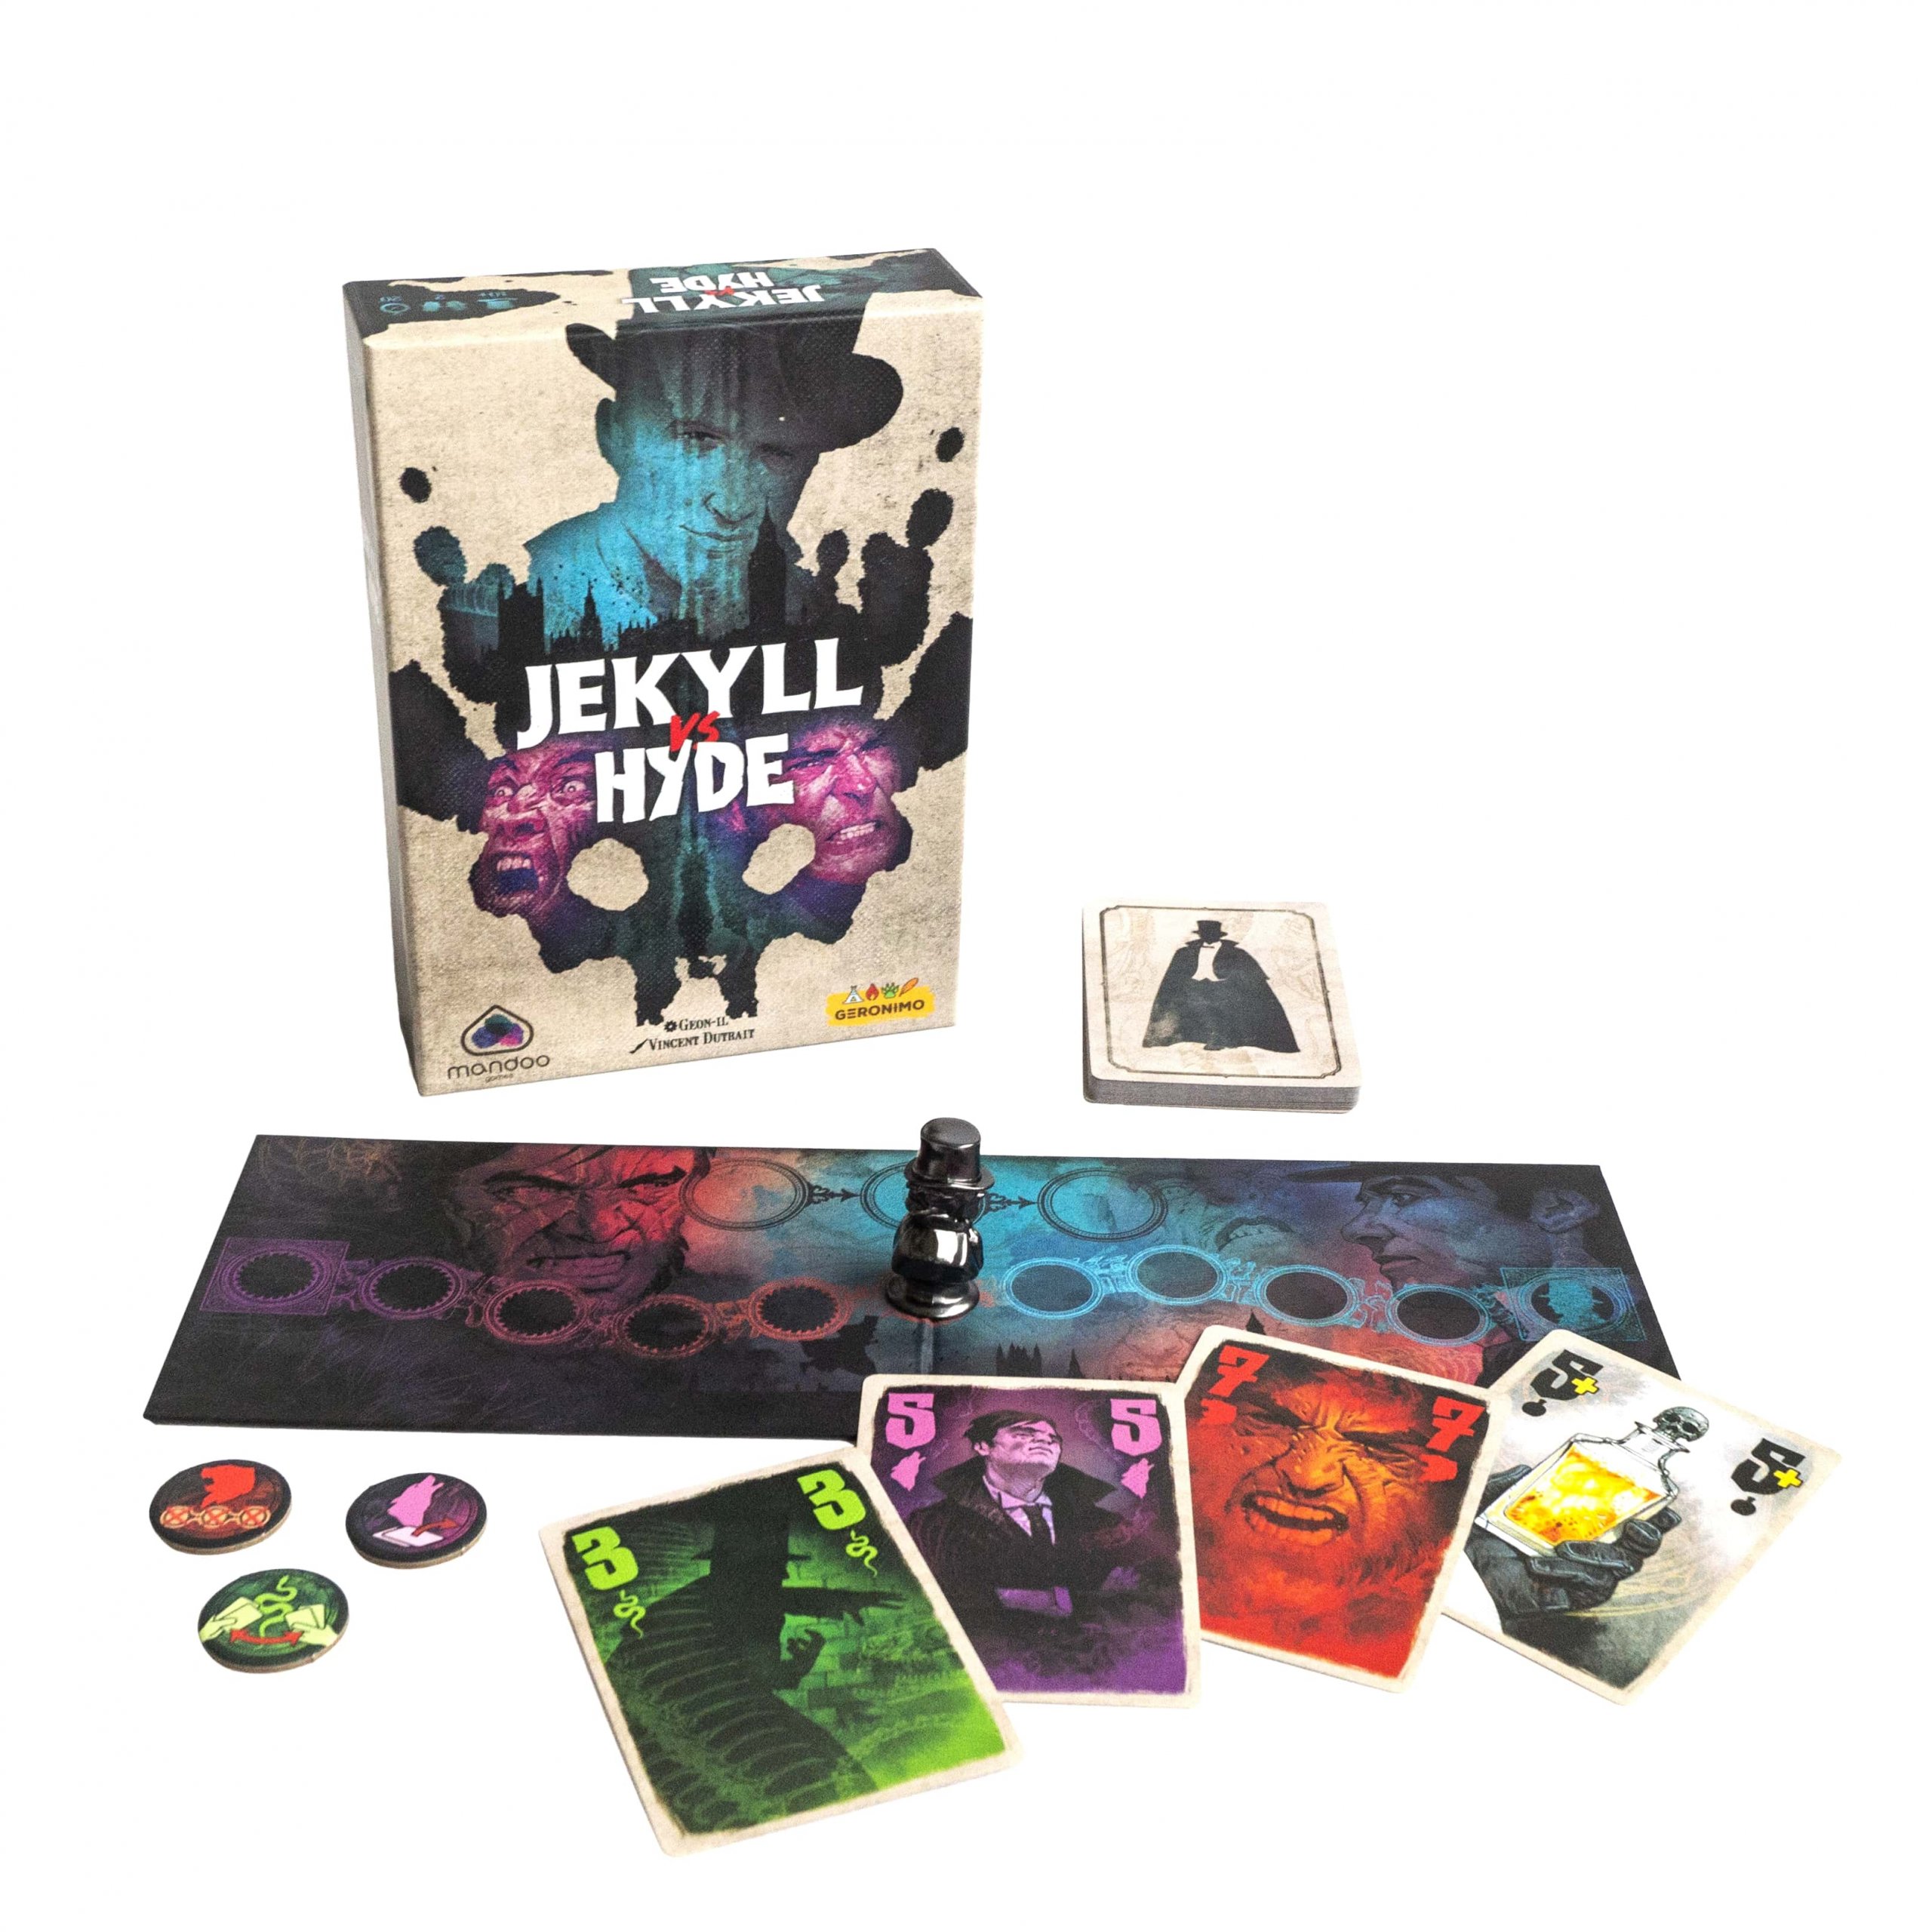 Jekyll VS Hyde van Geronimo Games vanaf deze week verkrijgbaar